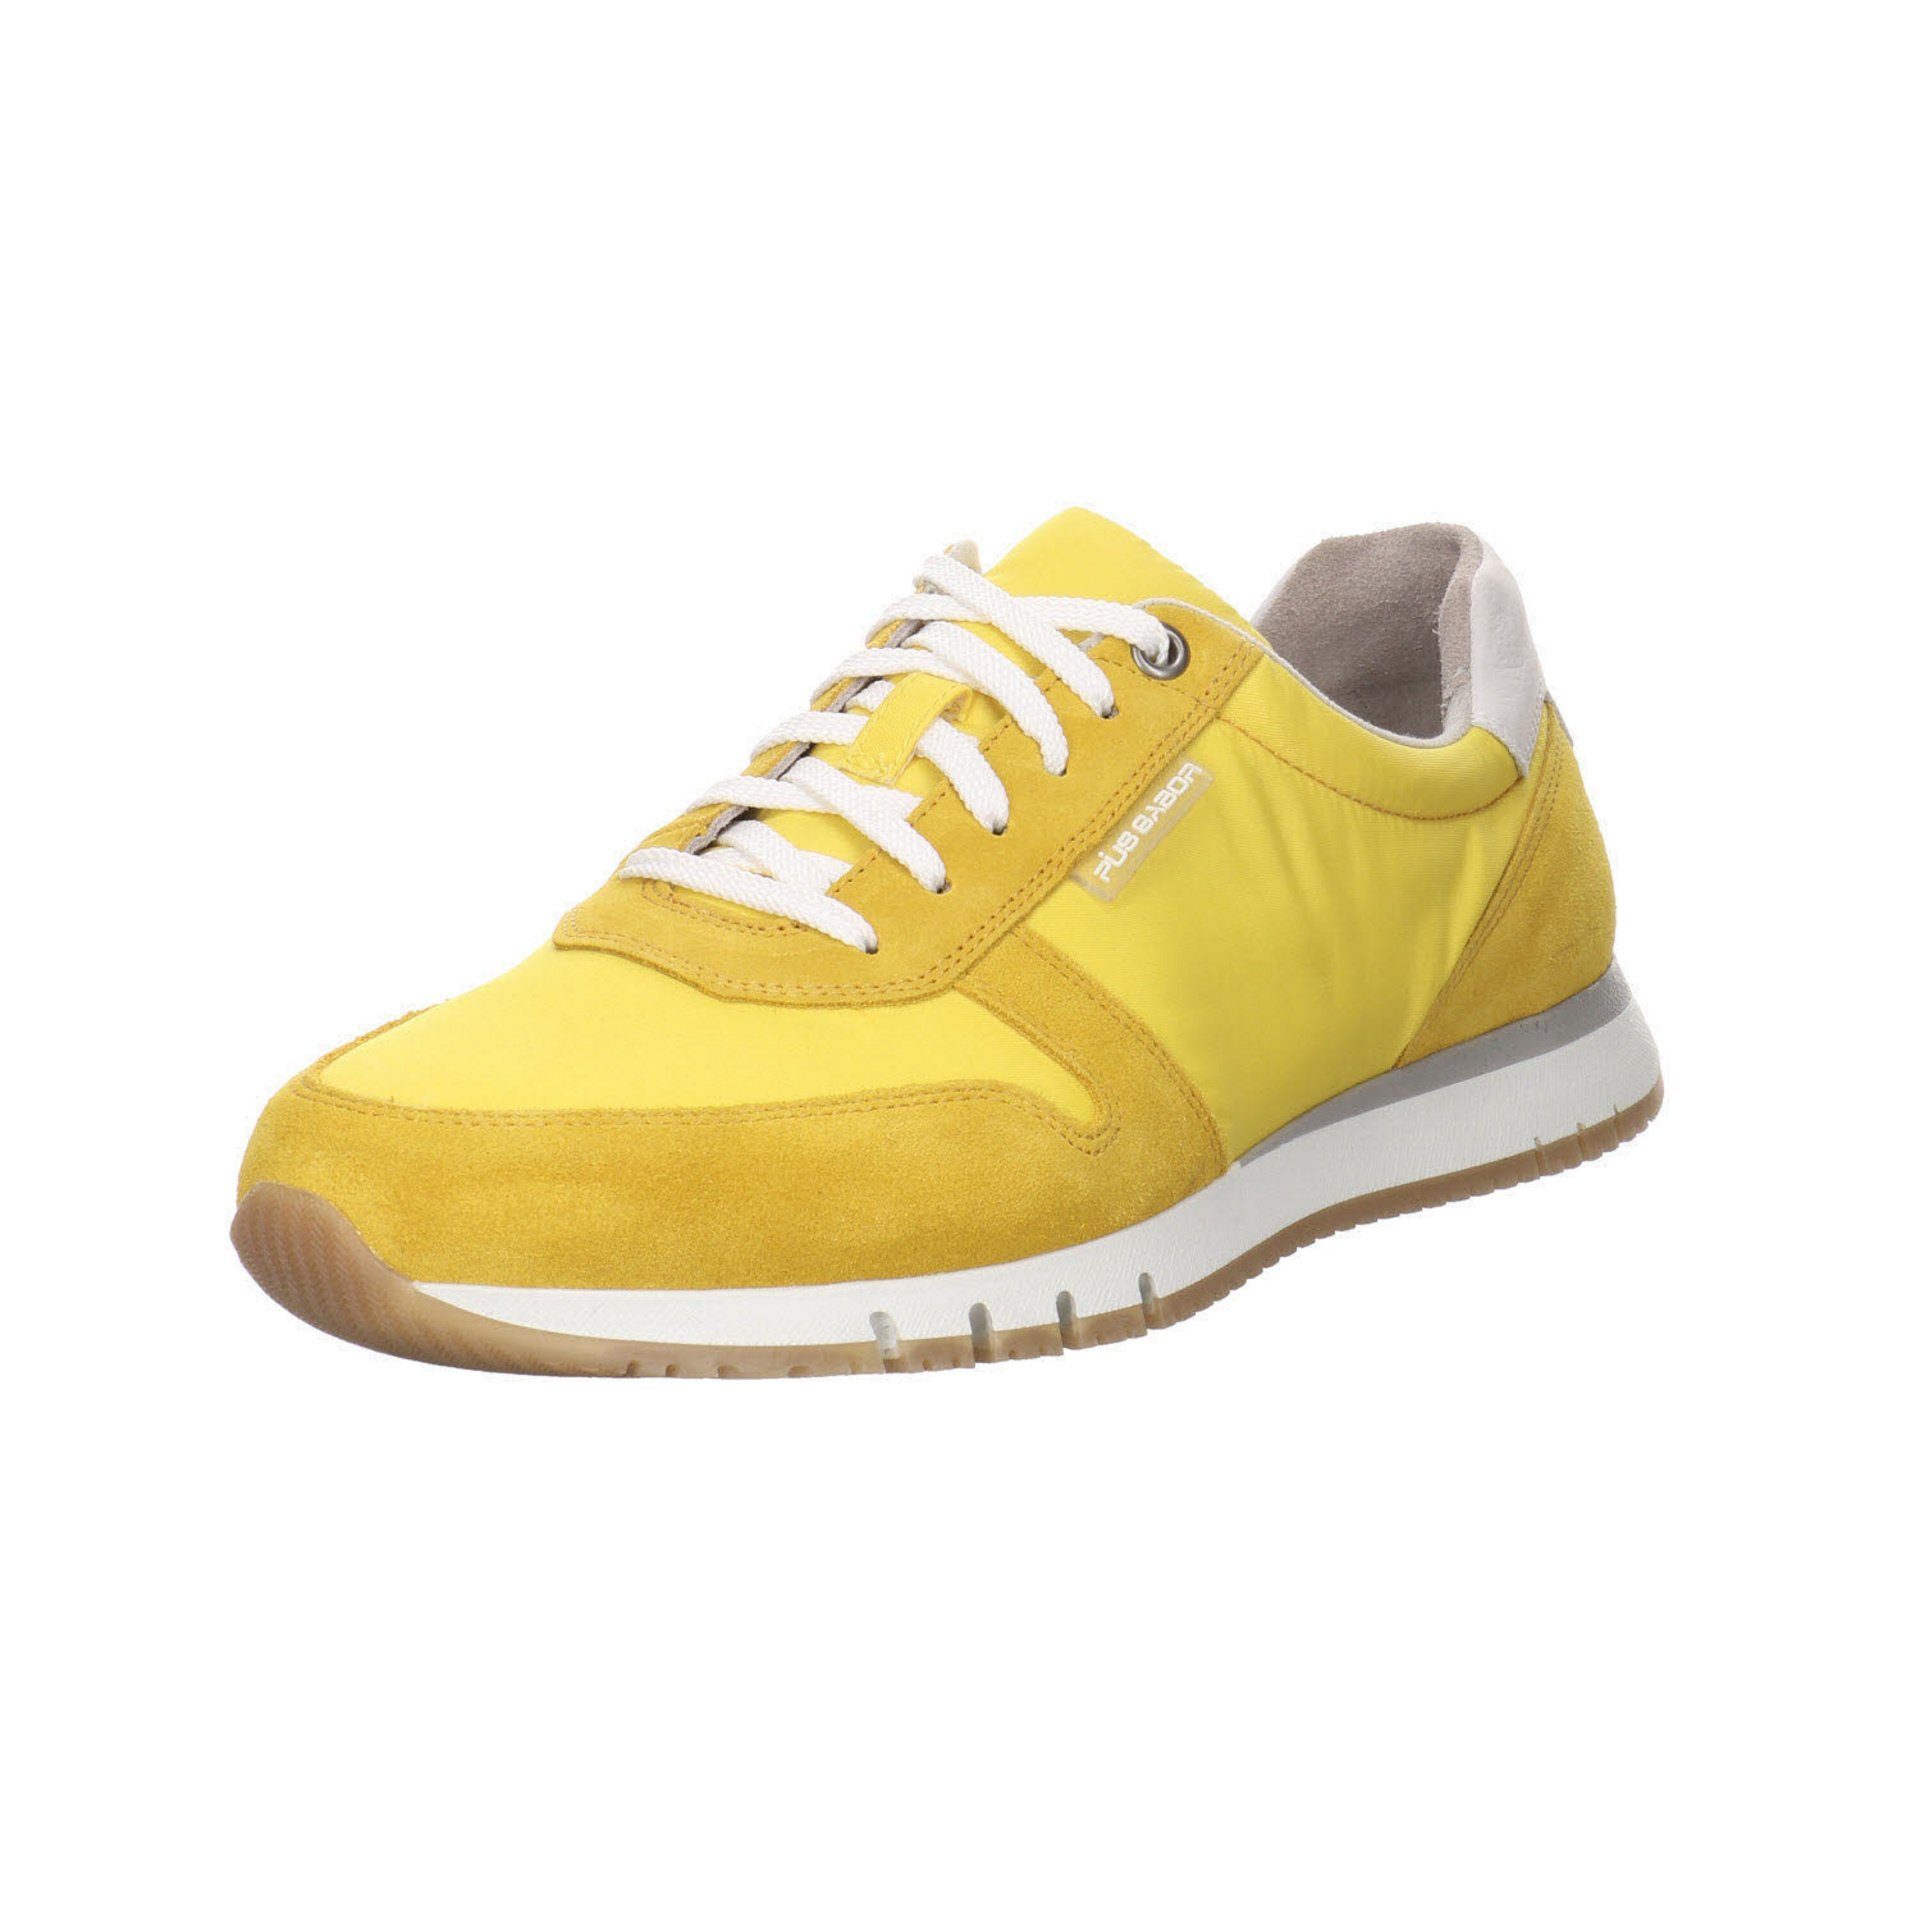 Pius Gabor Herren Sneaker Schuhe Sneaker Sport Halbschuhe Schnürschuh Lederkombination yellow | Sneaker